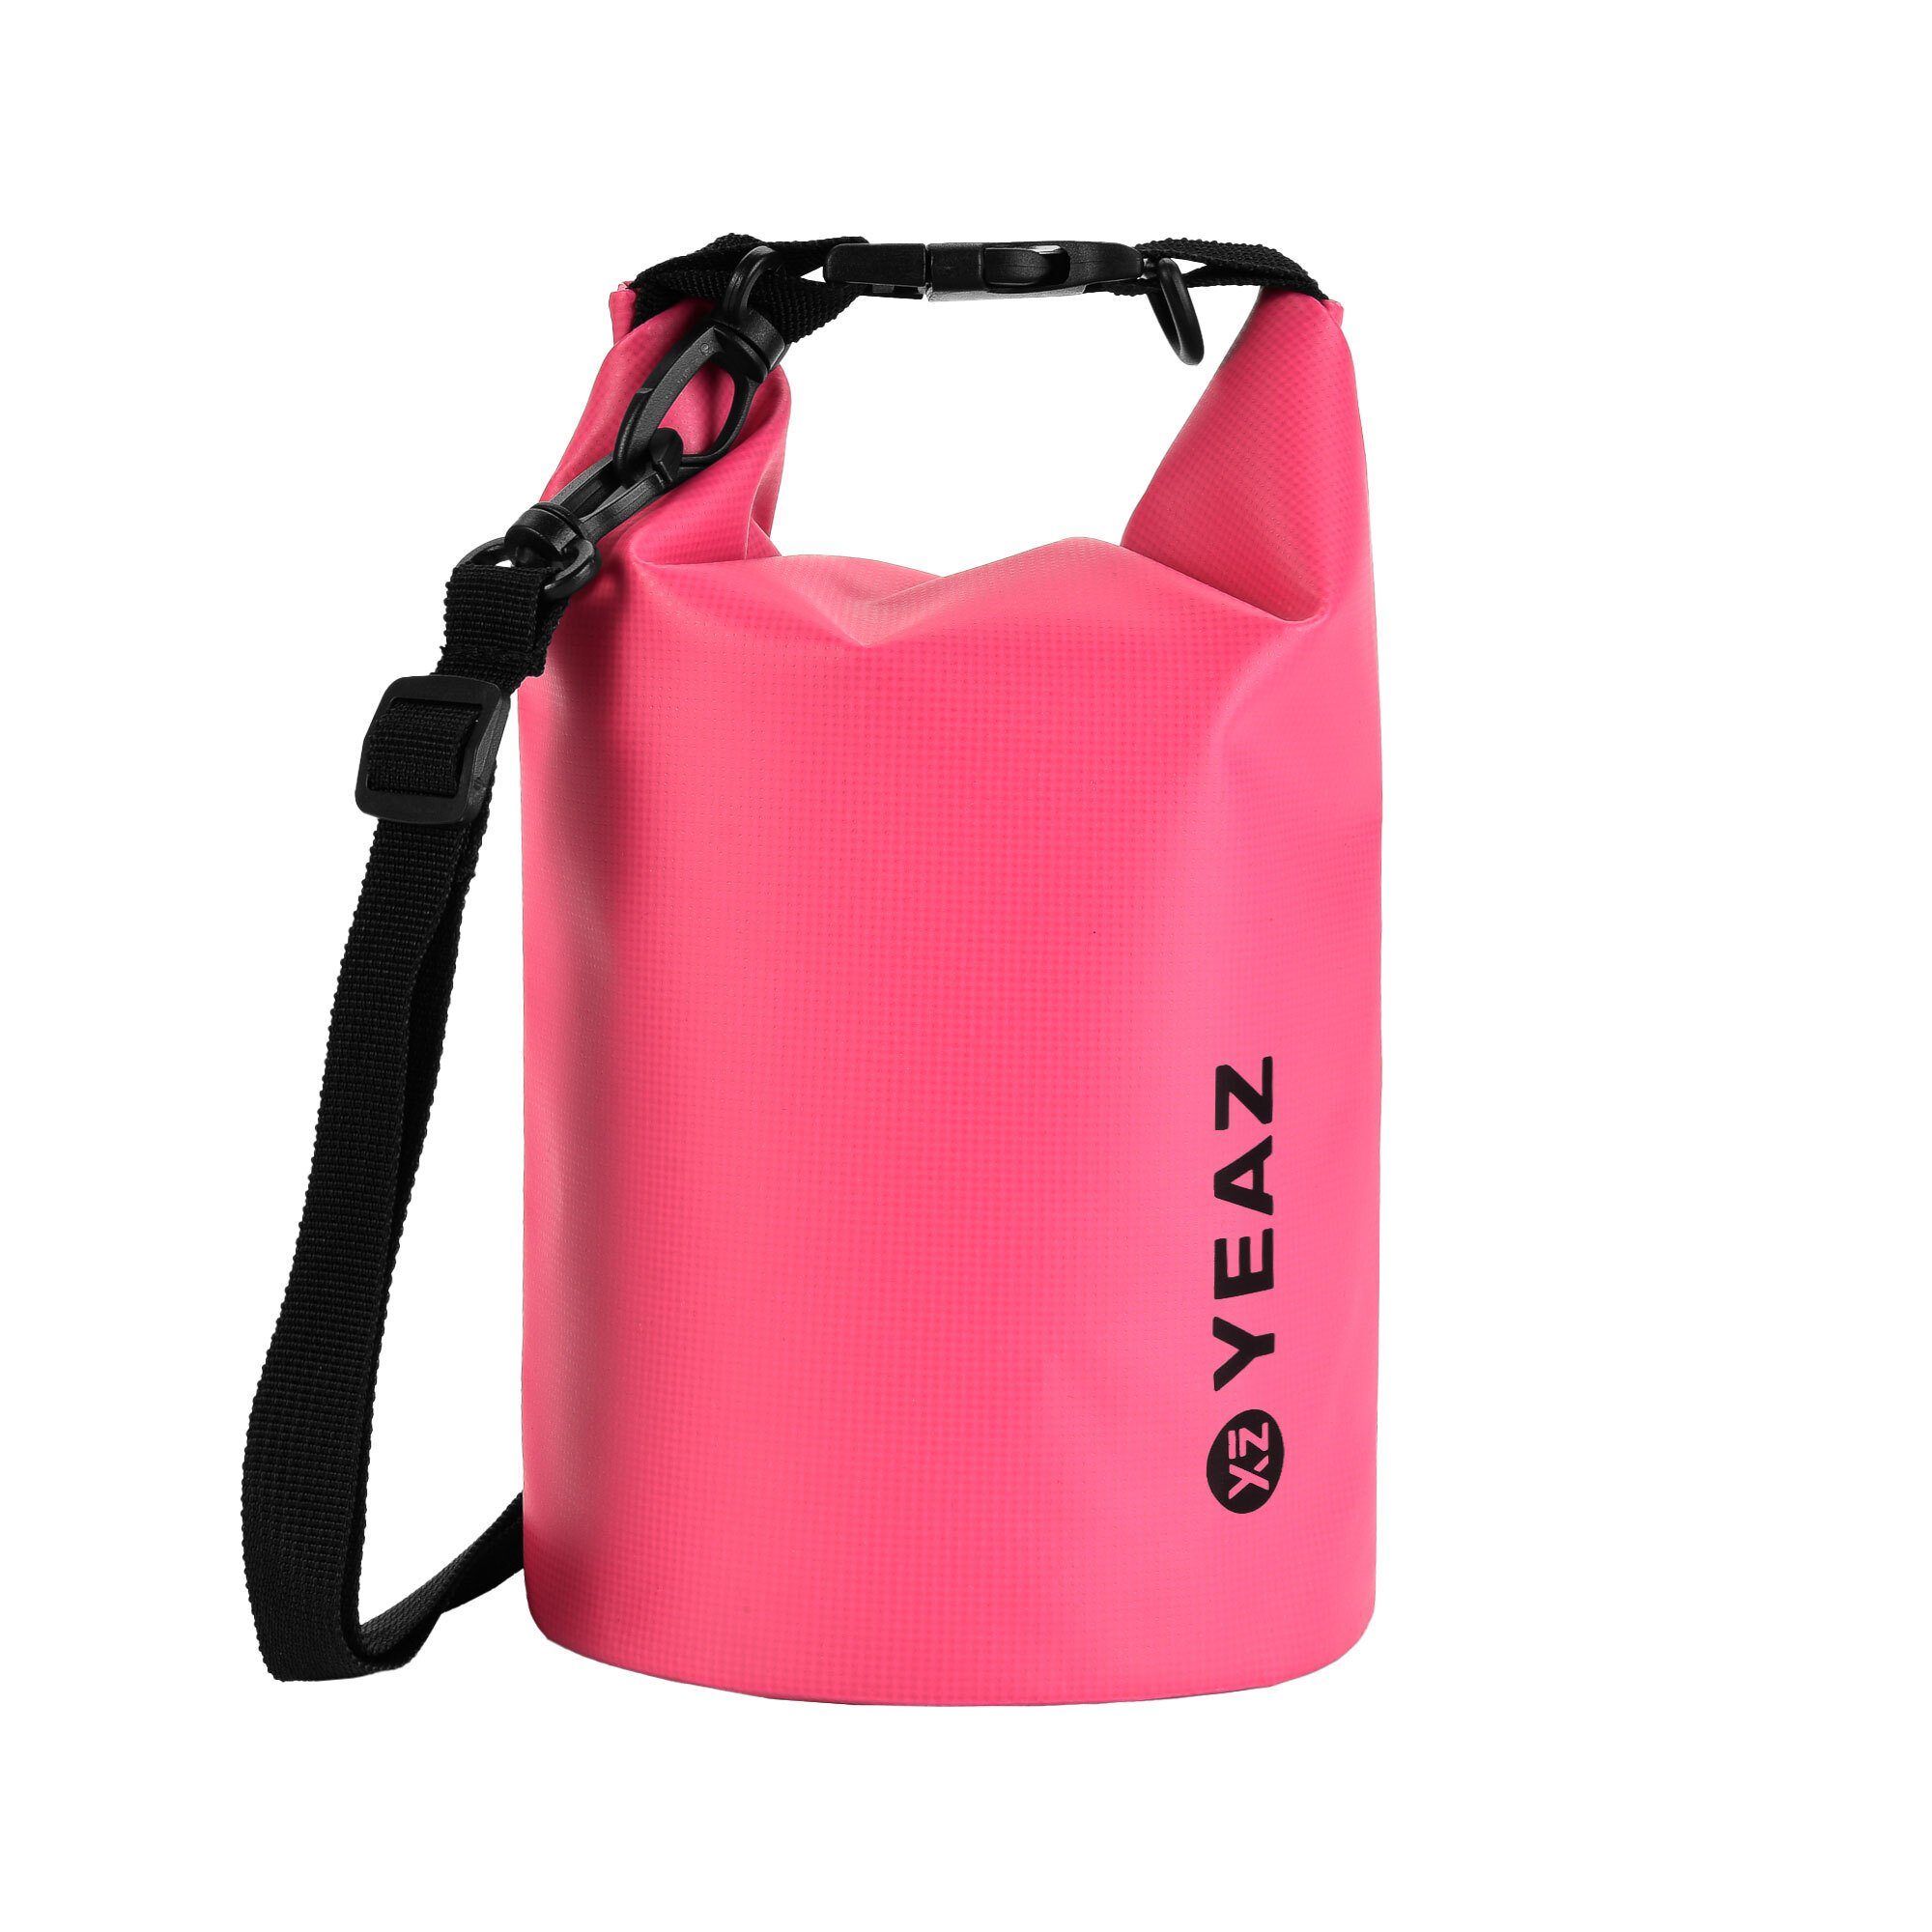 YEAZ Drybag pink wasserfester packsack 1,5l ISAR